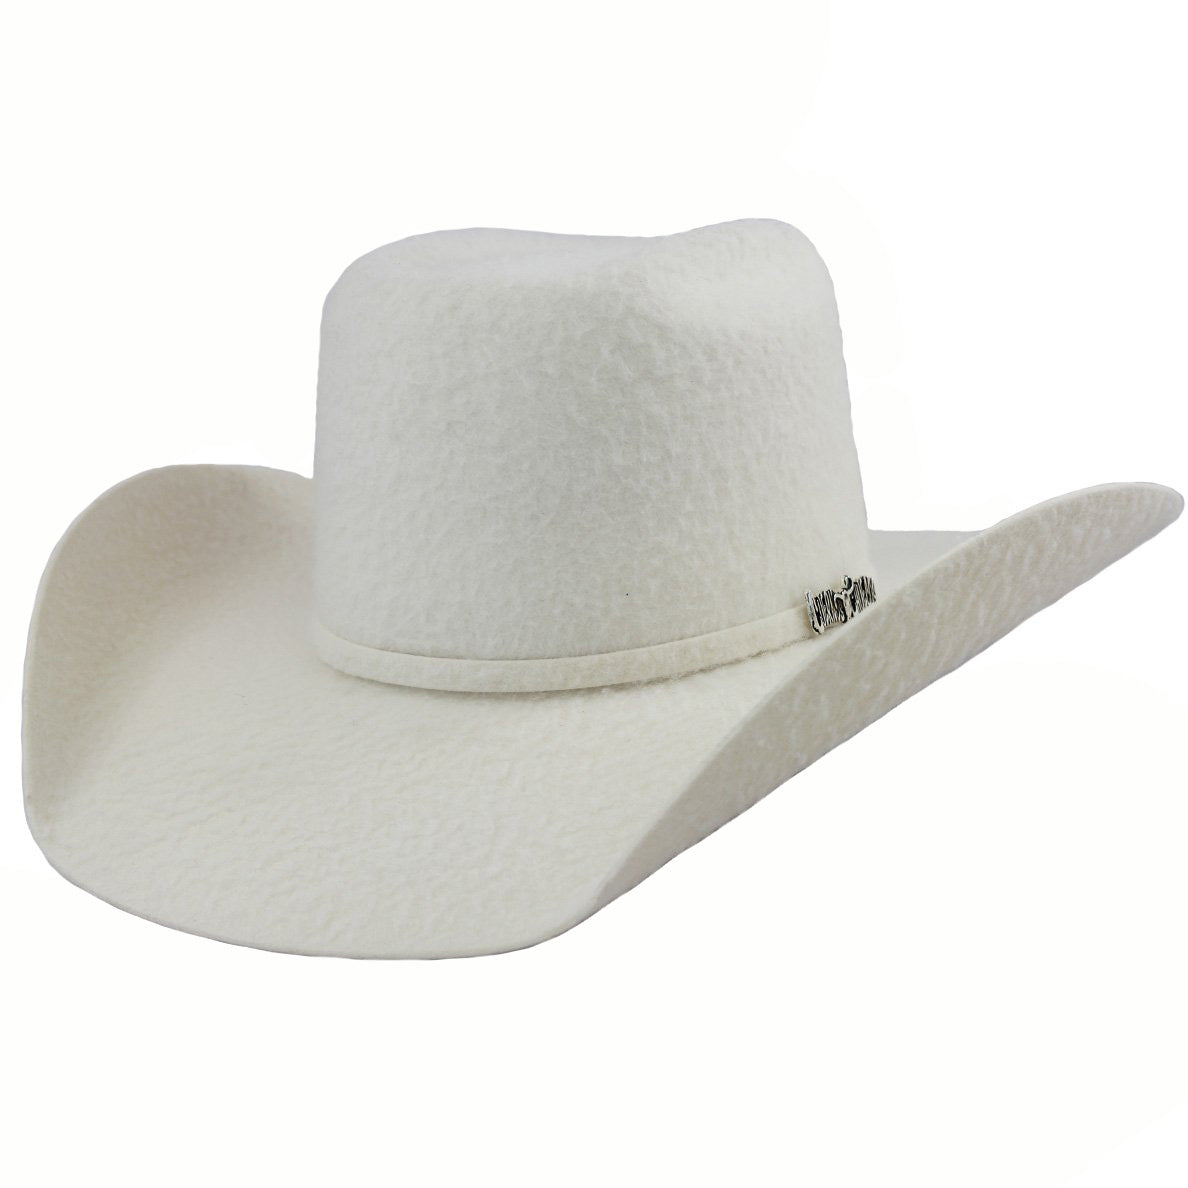 White Felt Cowboy Hat - Cuernos Chuecos